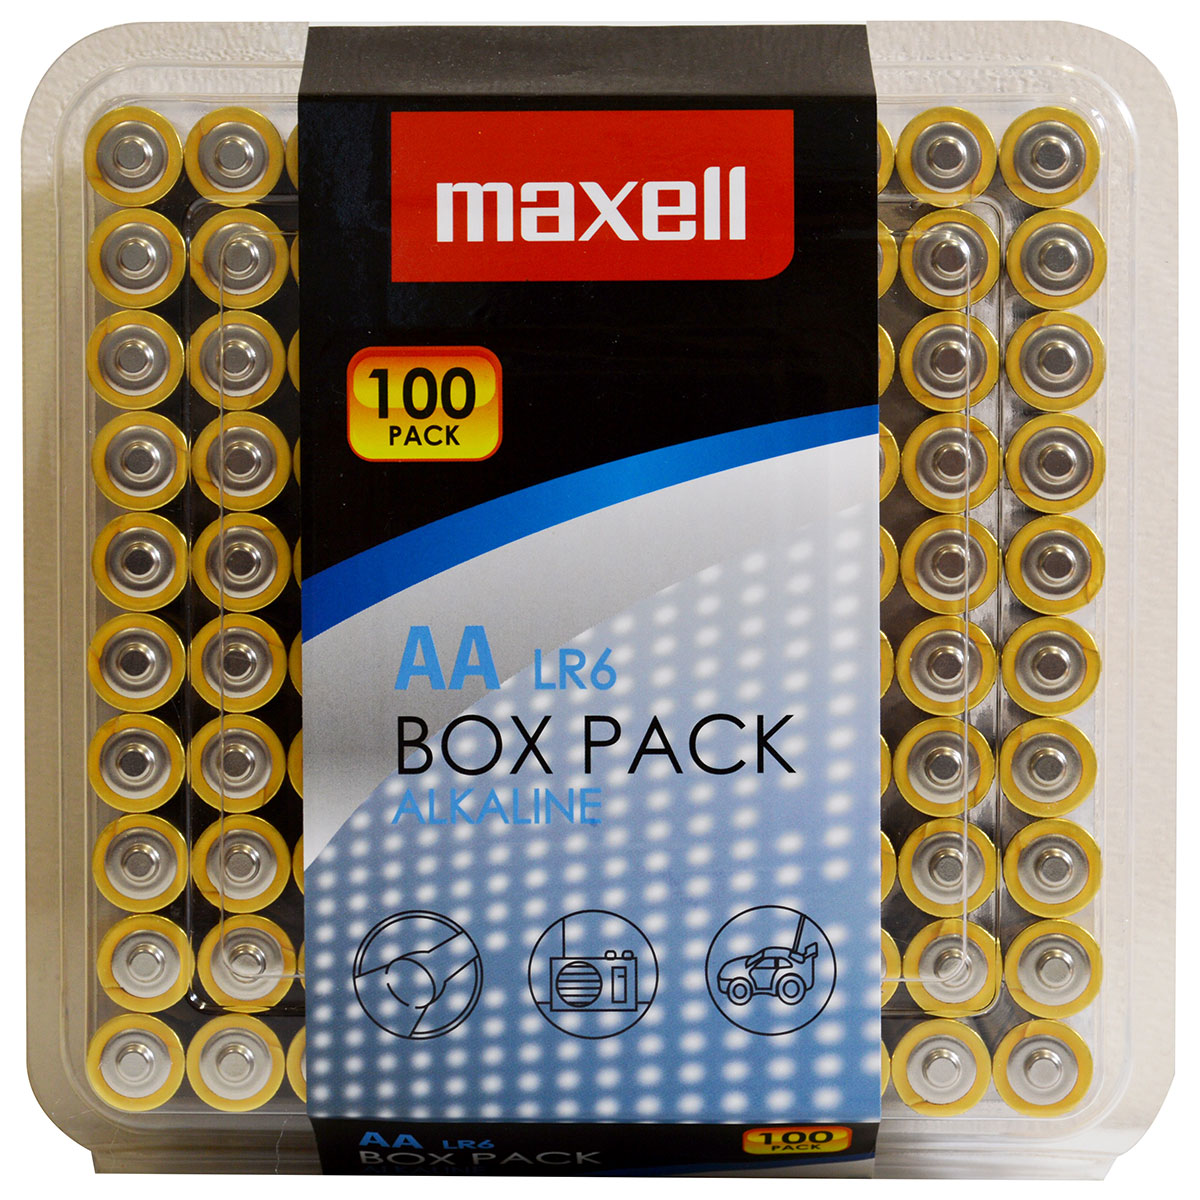 Maxell Alkaline LR06 AA Mignon 1,5 V batterij, 100 stuks in Box Pack
